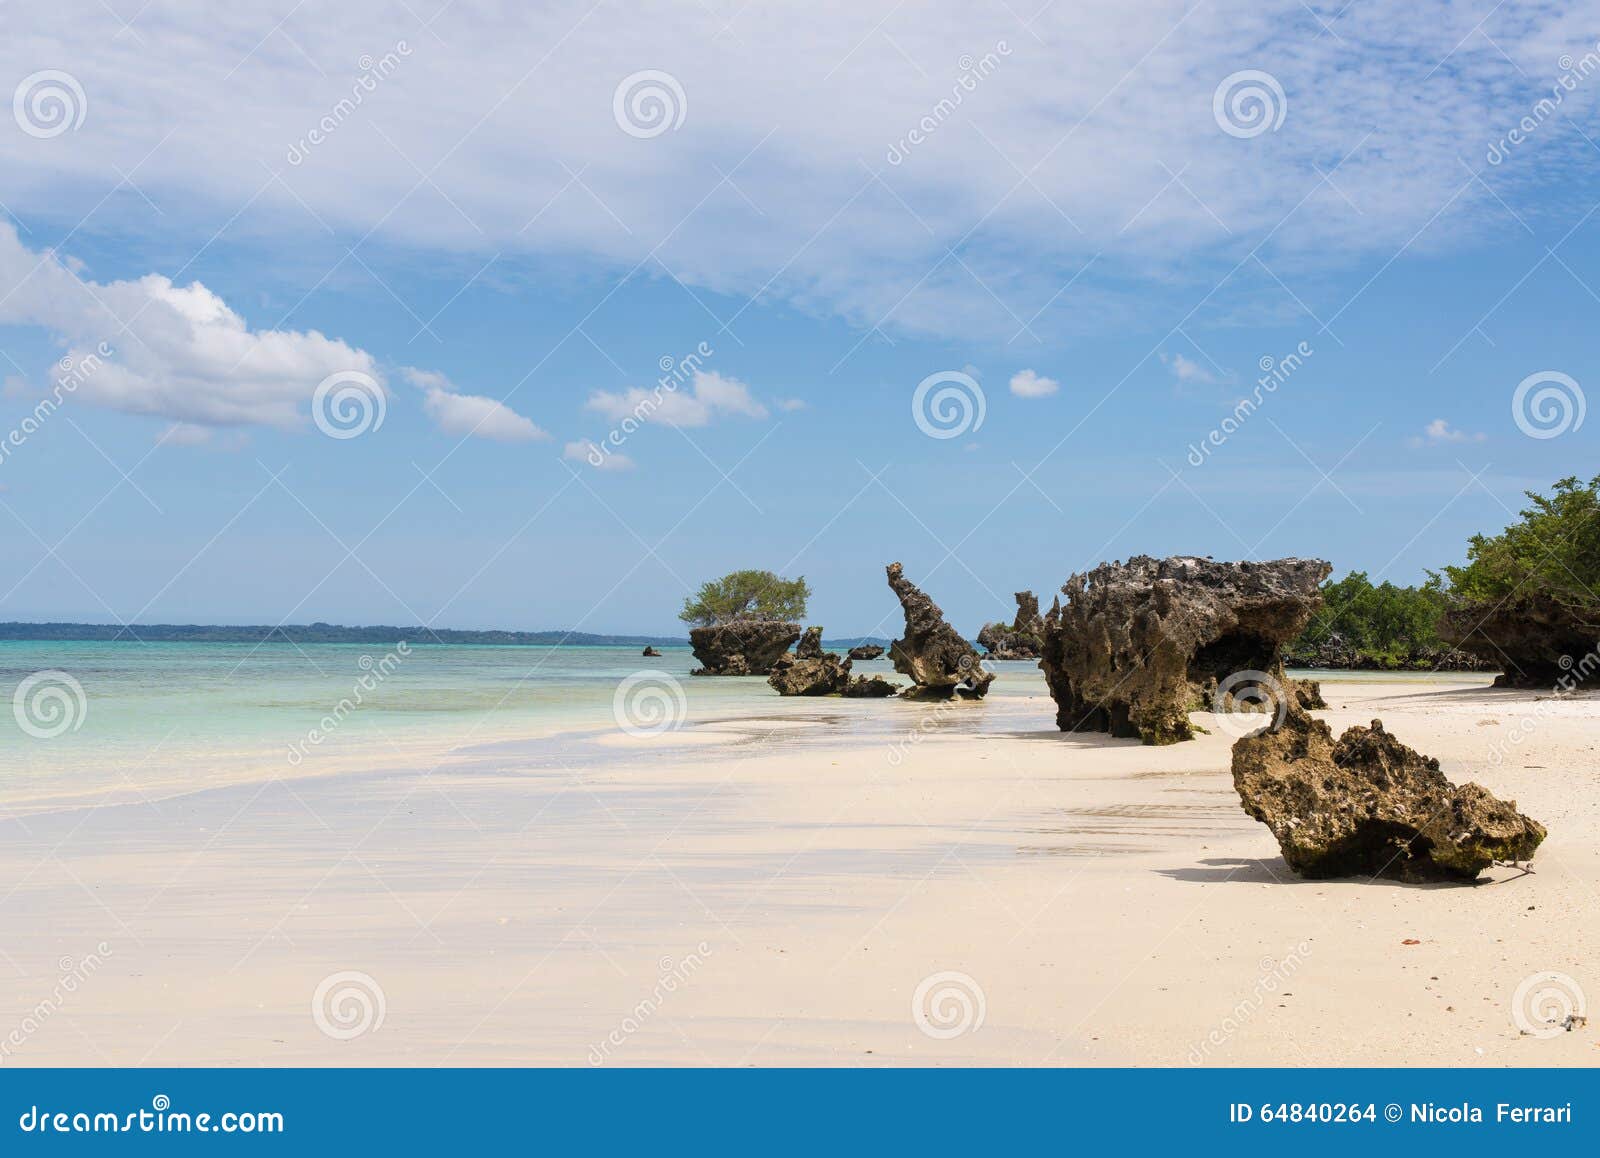 pristine white tropical beach with rocks, blue sea and lush vegetation on the african island of misali, pemba, zanzibar.